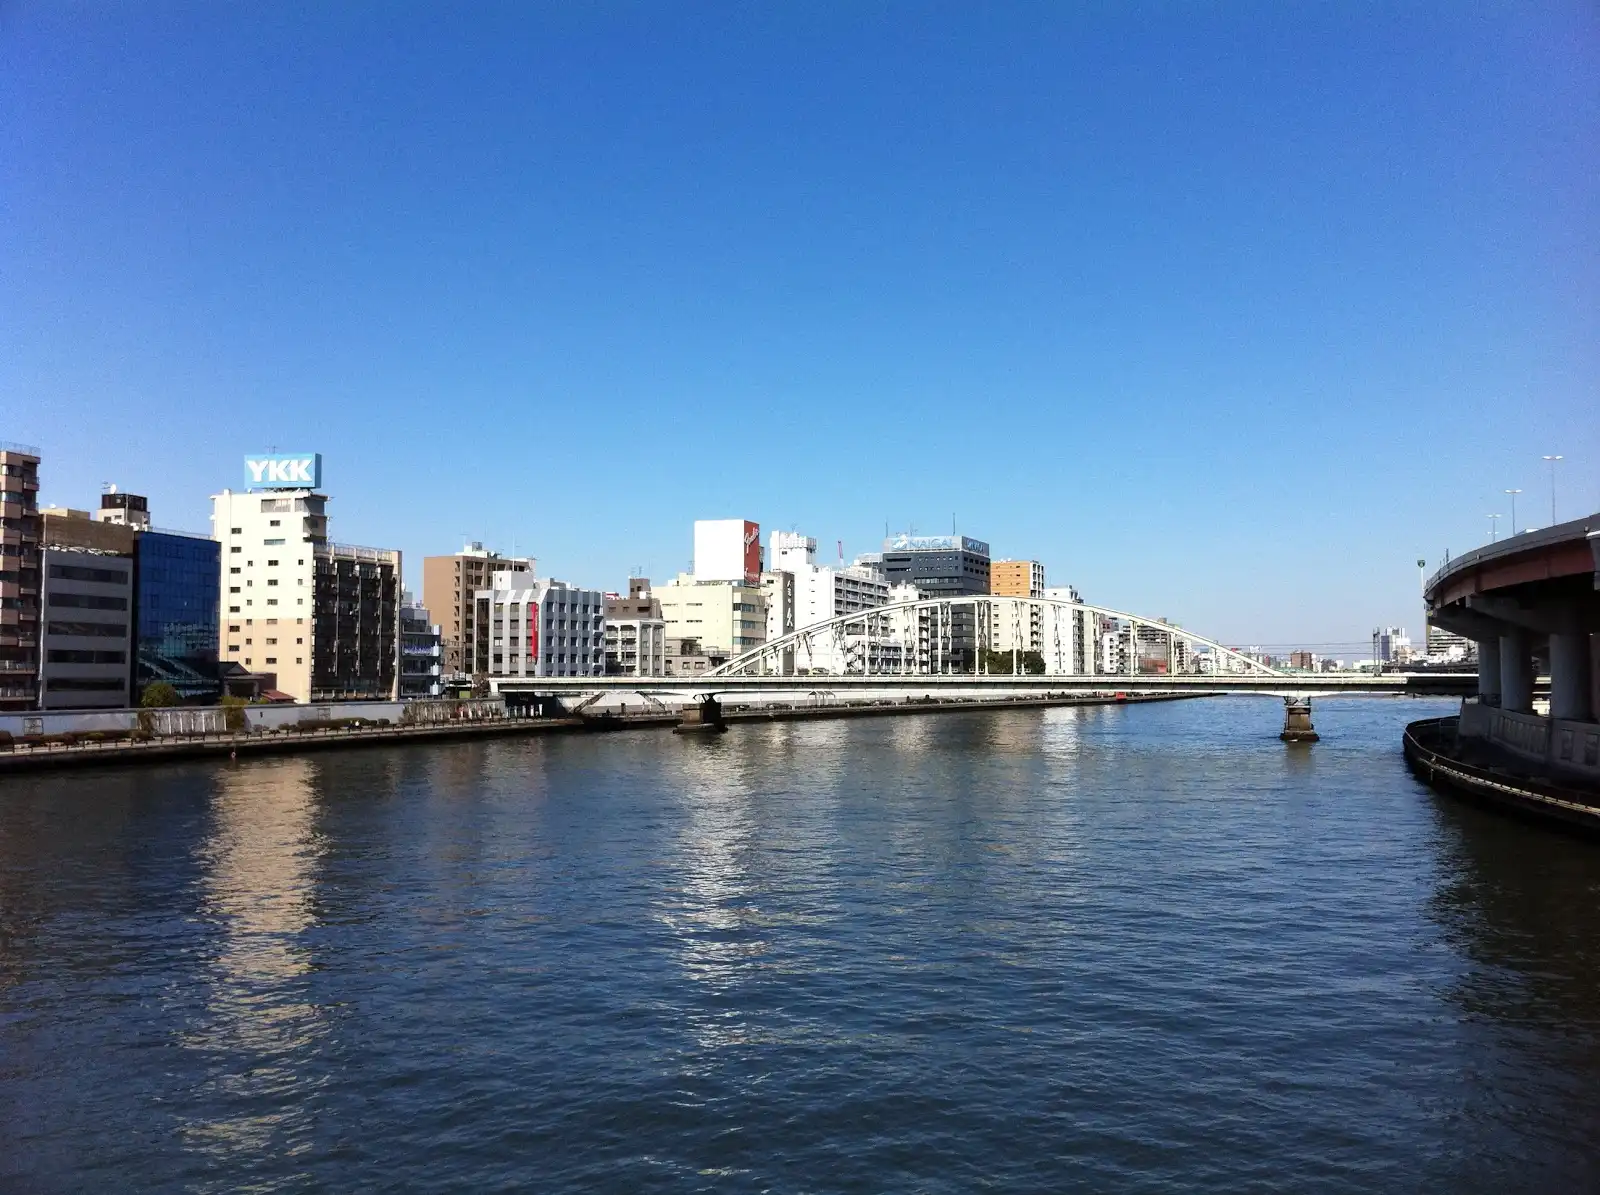 Sumida tourism